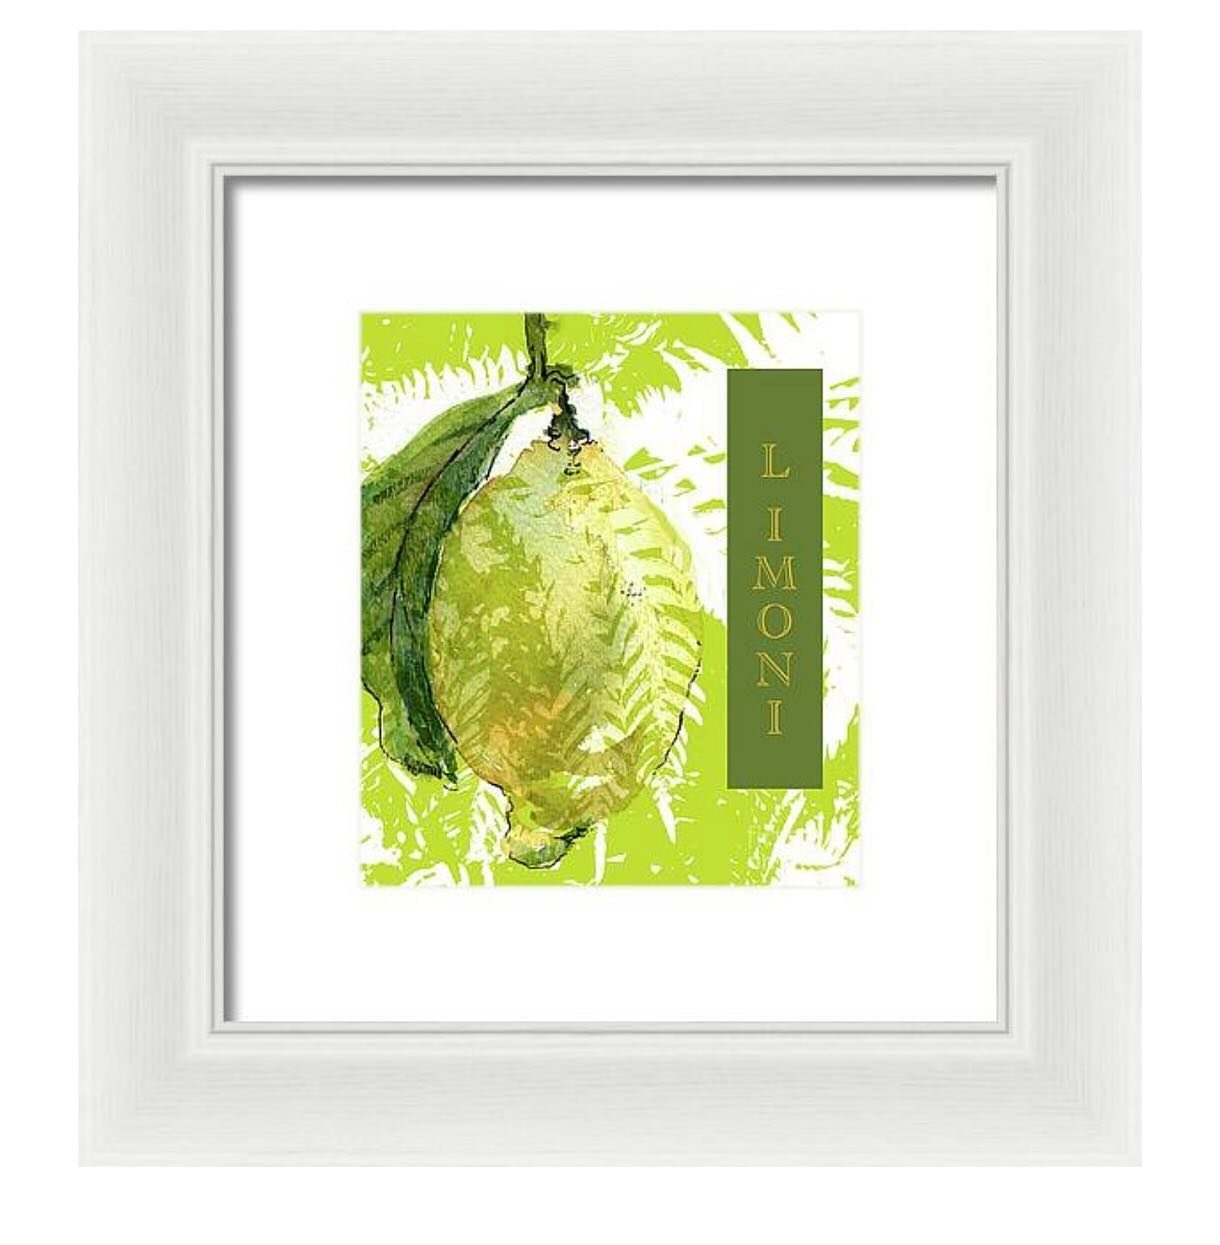 Making lemonade time .
Customize your frame choice , click on fine Art link in bio to order .
#lemonade 
#lemonart 
#artprint 
#homedecor
#artforhome 
#sanfranciscoartist 
#fruitprint